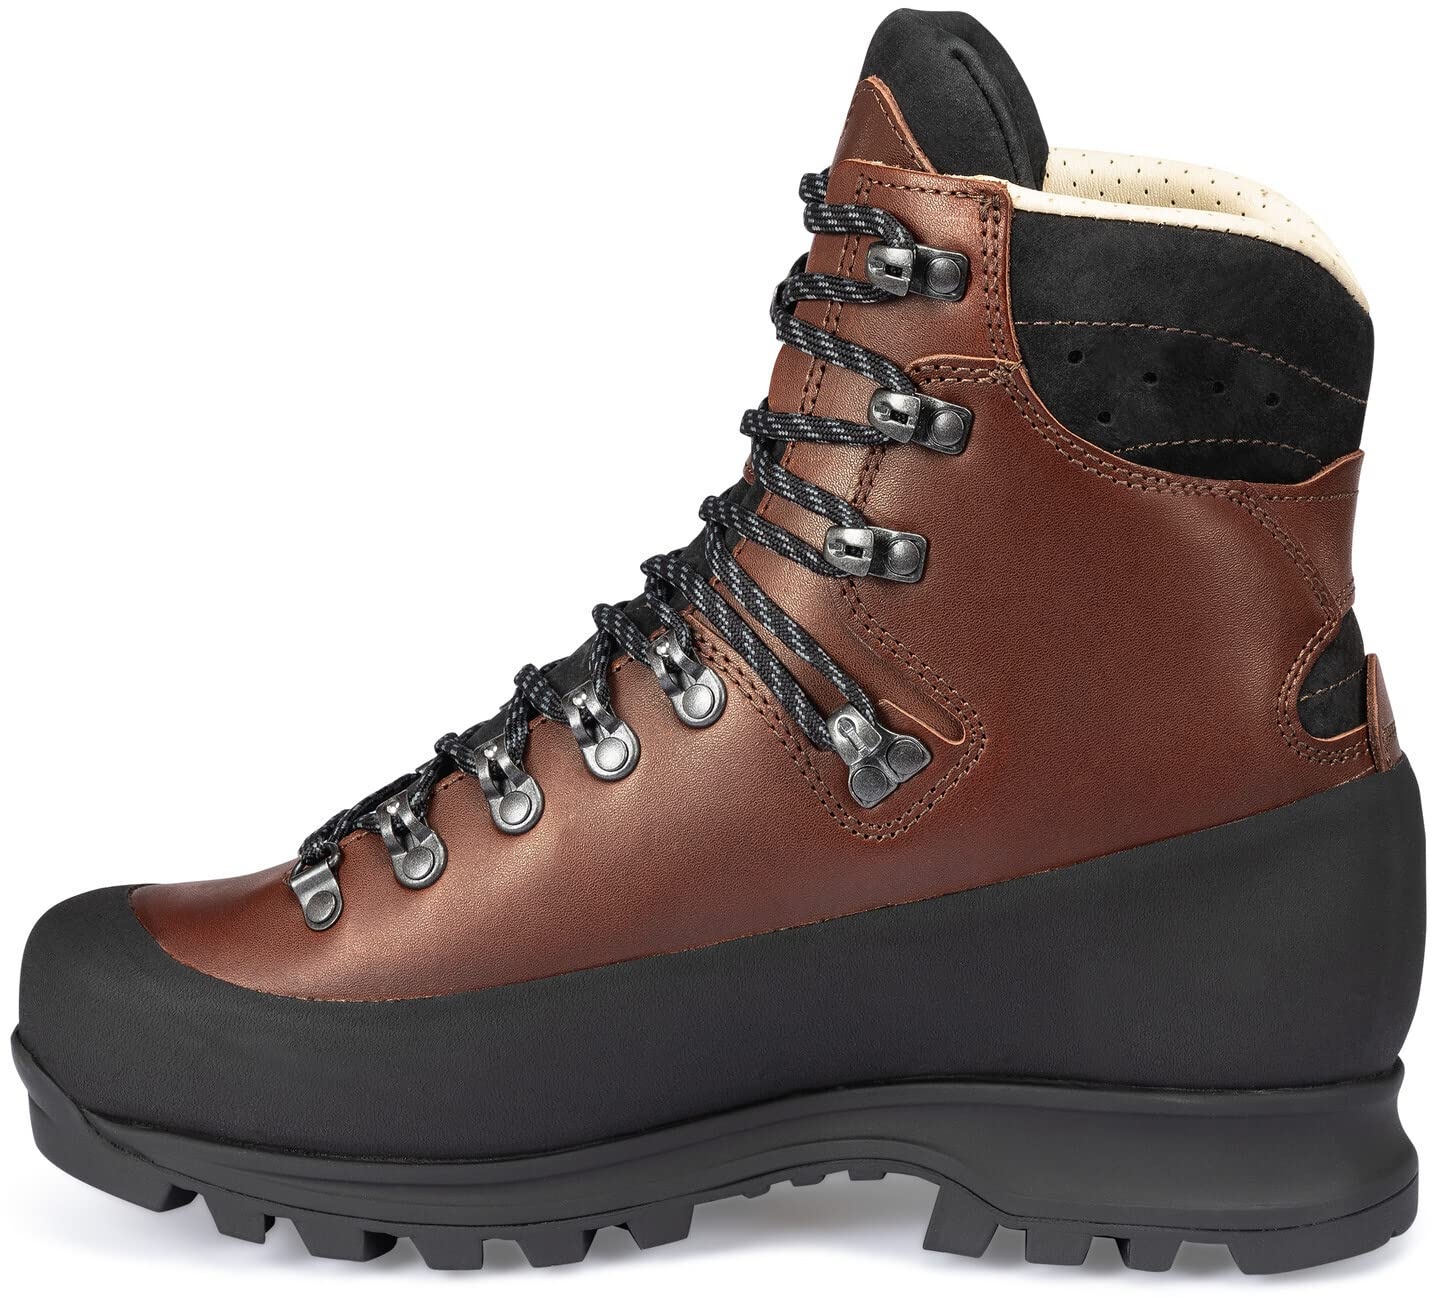 Hanwag Alaska Pro Wide GTX Schuhe Herren braun/schwarz - 41.5 EU Weit